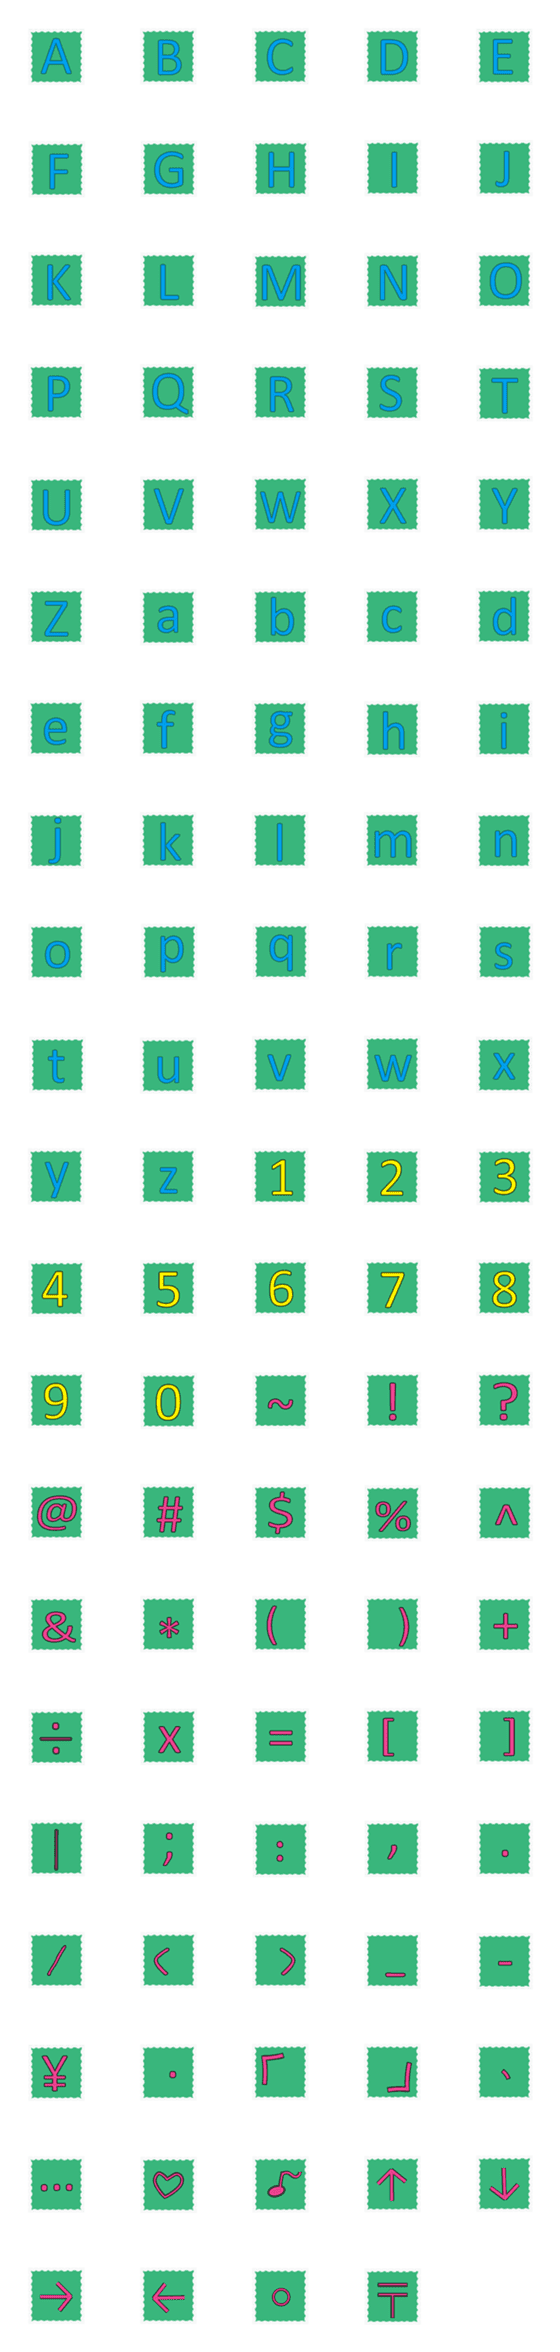 [LINE絵文字]Stamp style alphabet symbolsの画像一覧